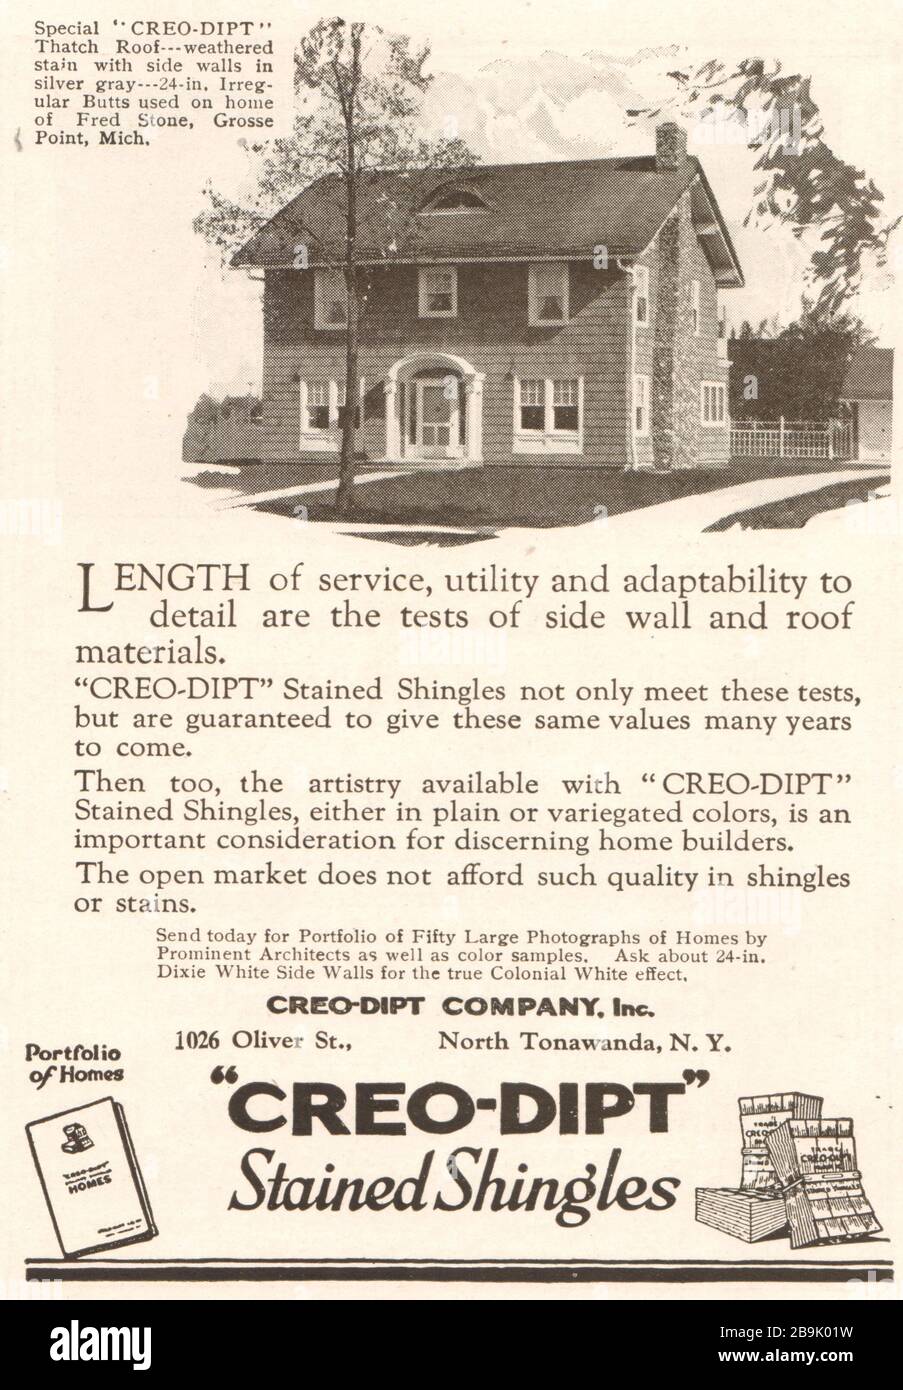 Home of Fred Stone, Grosse Point, Michigan. Creo-dipt stained shingles. Creo-dipt Company, Inc., 1026 Oliver St., North Tonawanda, New York (1922) Stock Photo